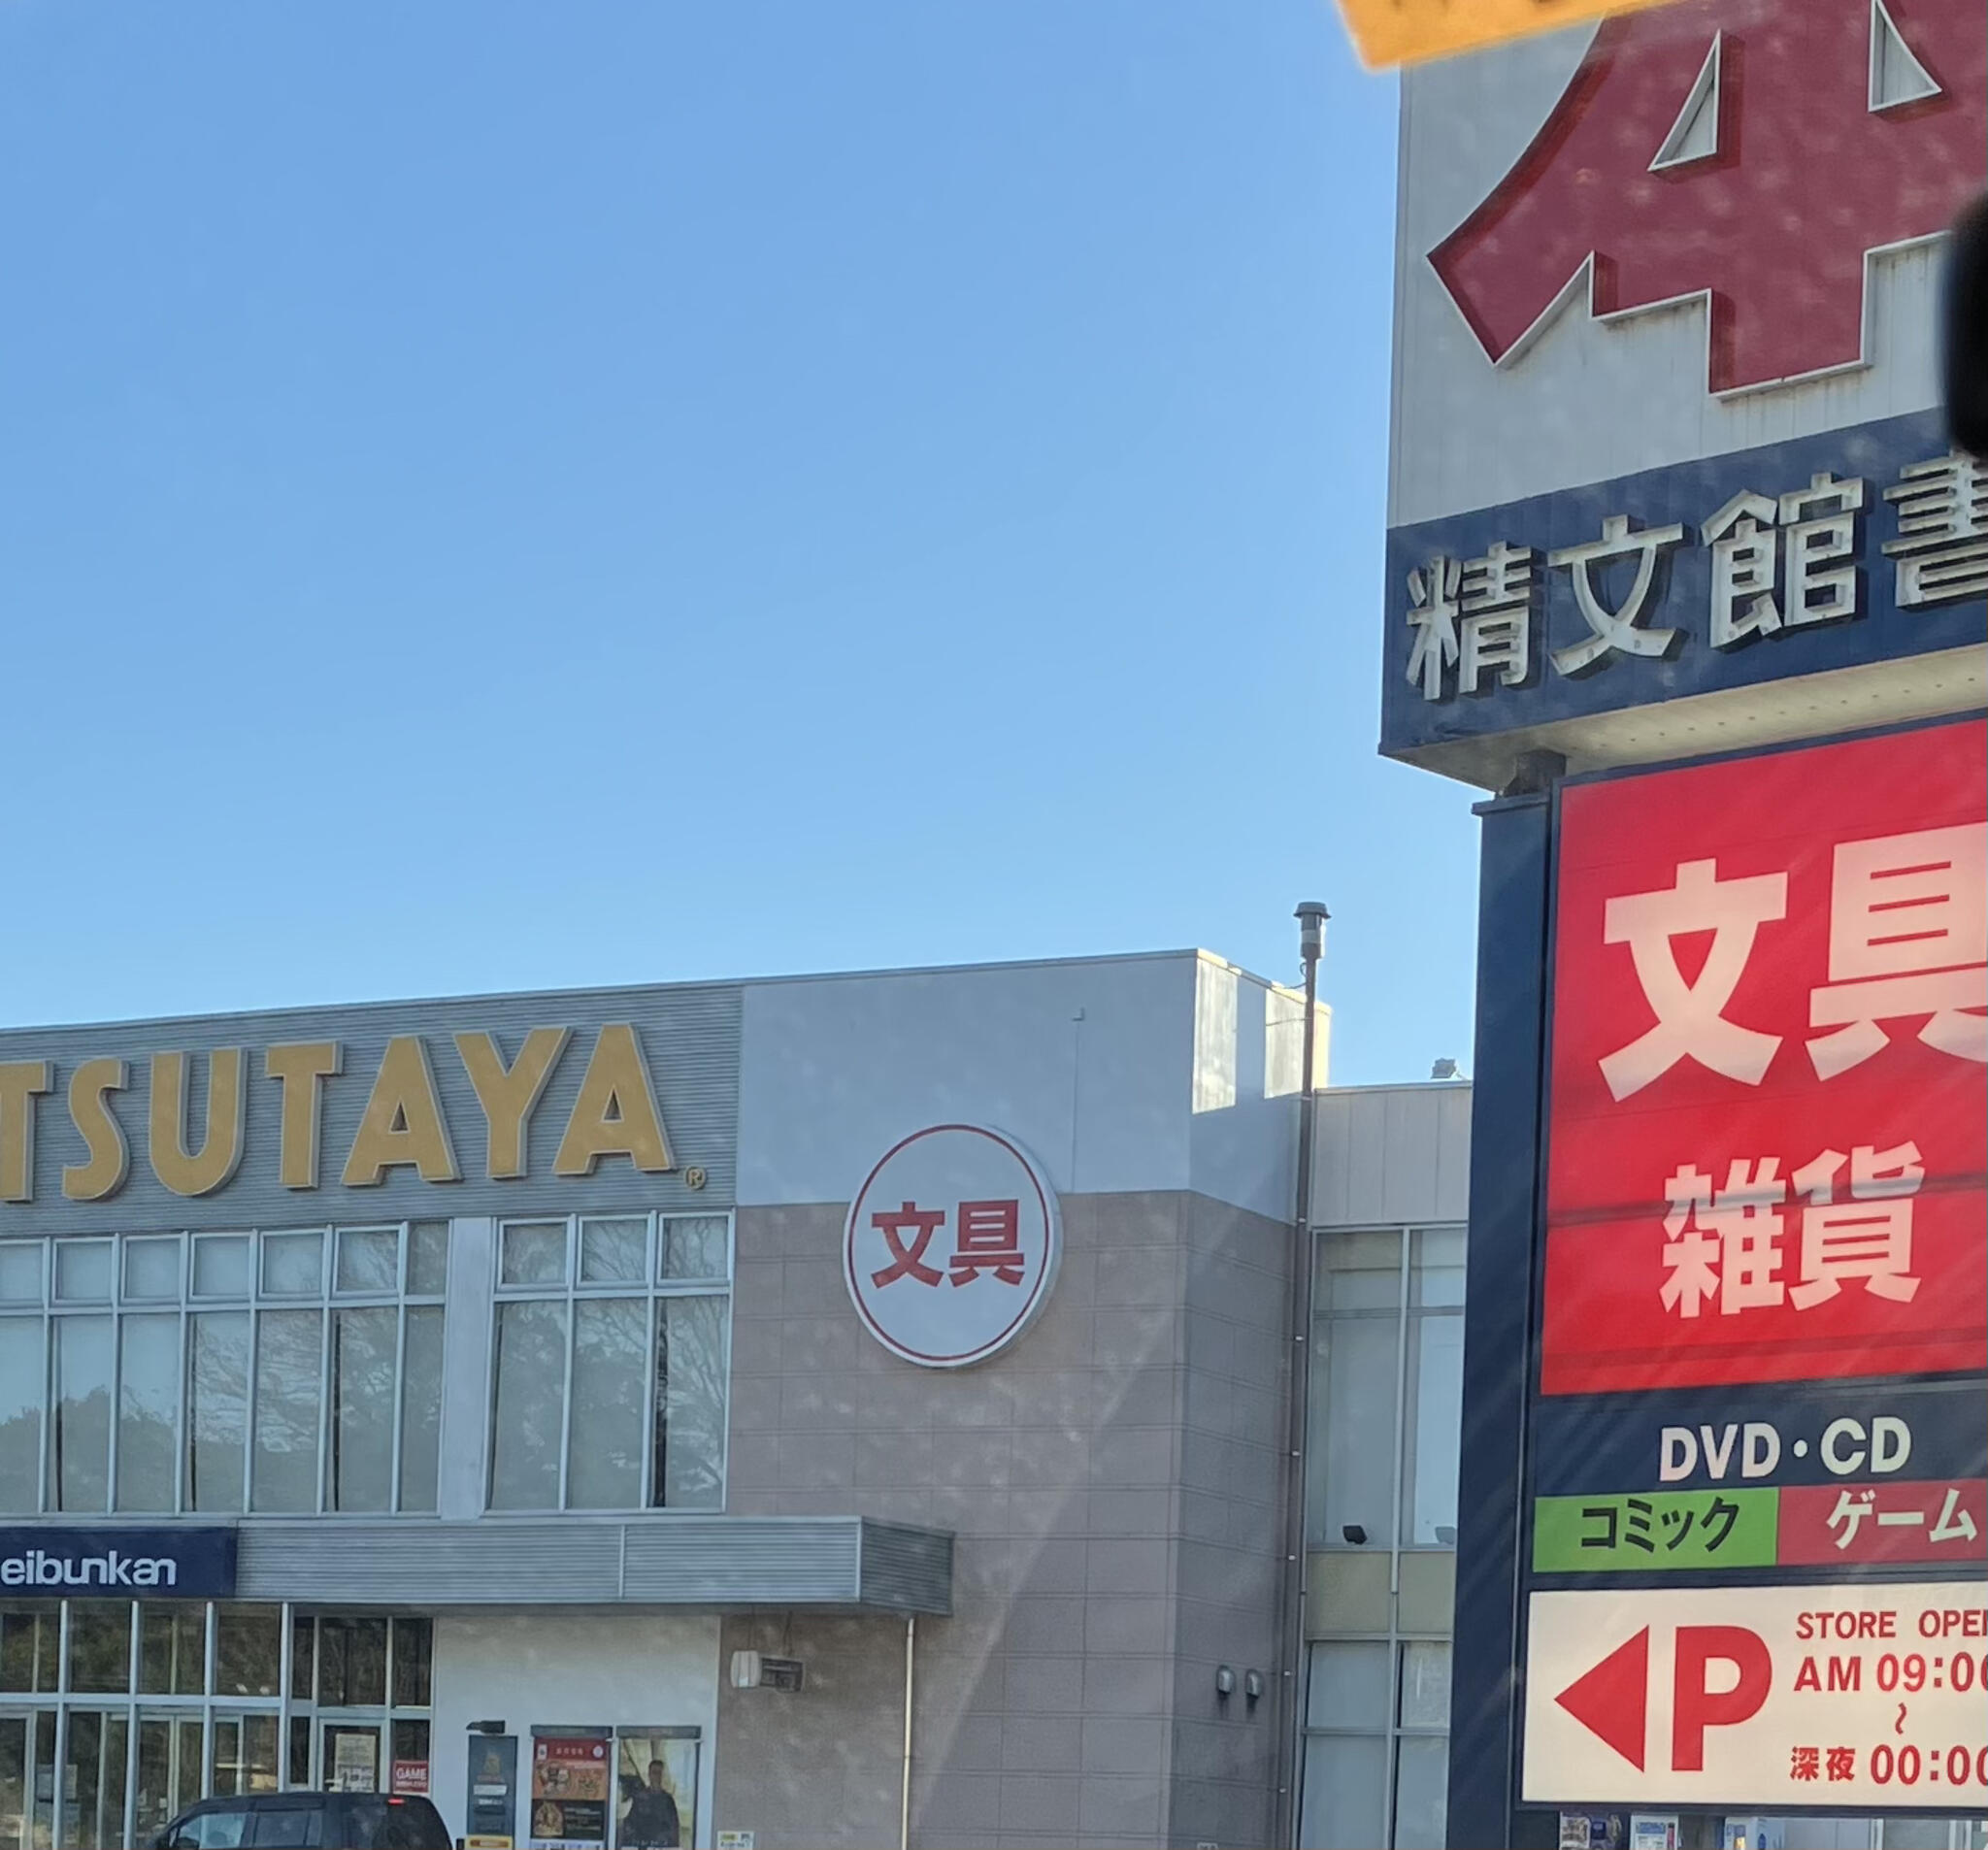 TSUTAYA 豊明店の代表写真3